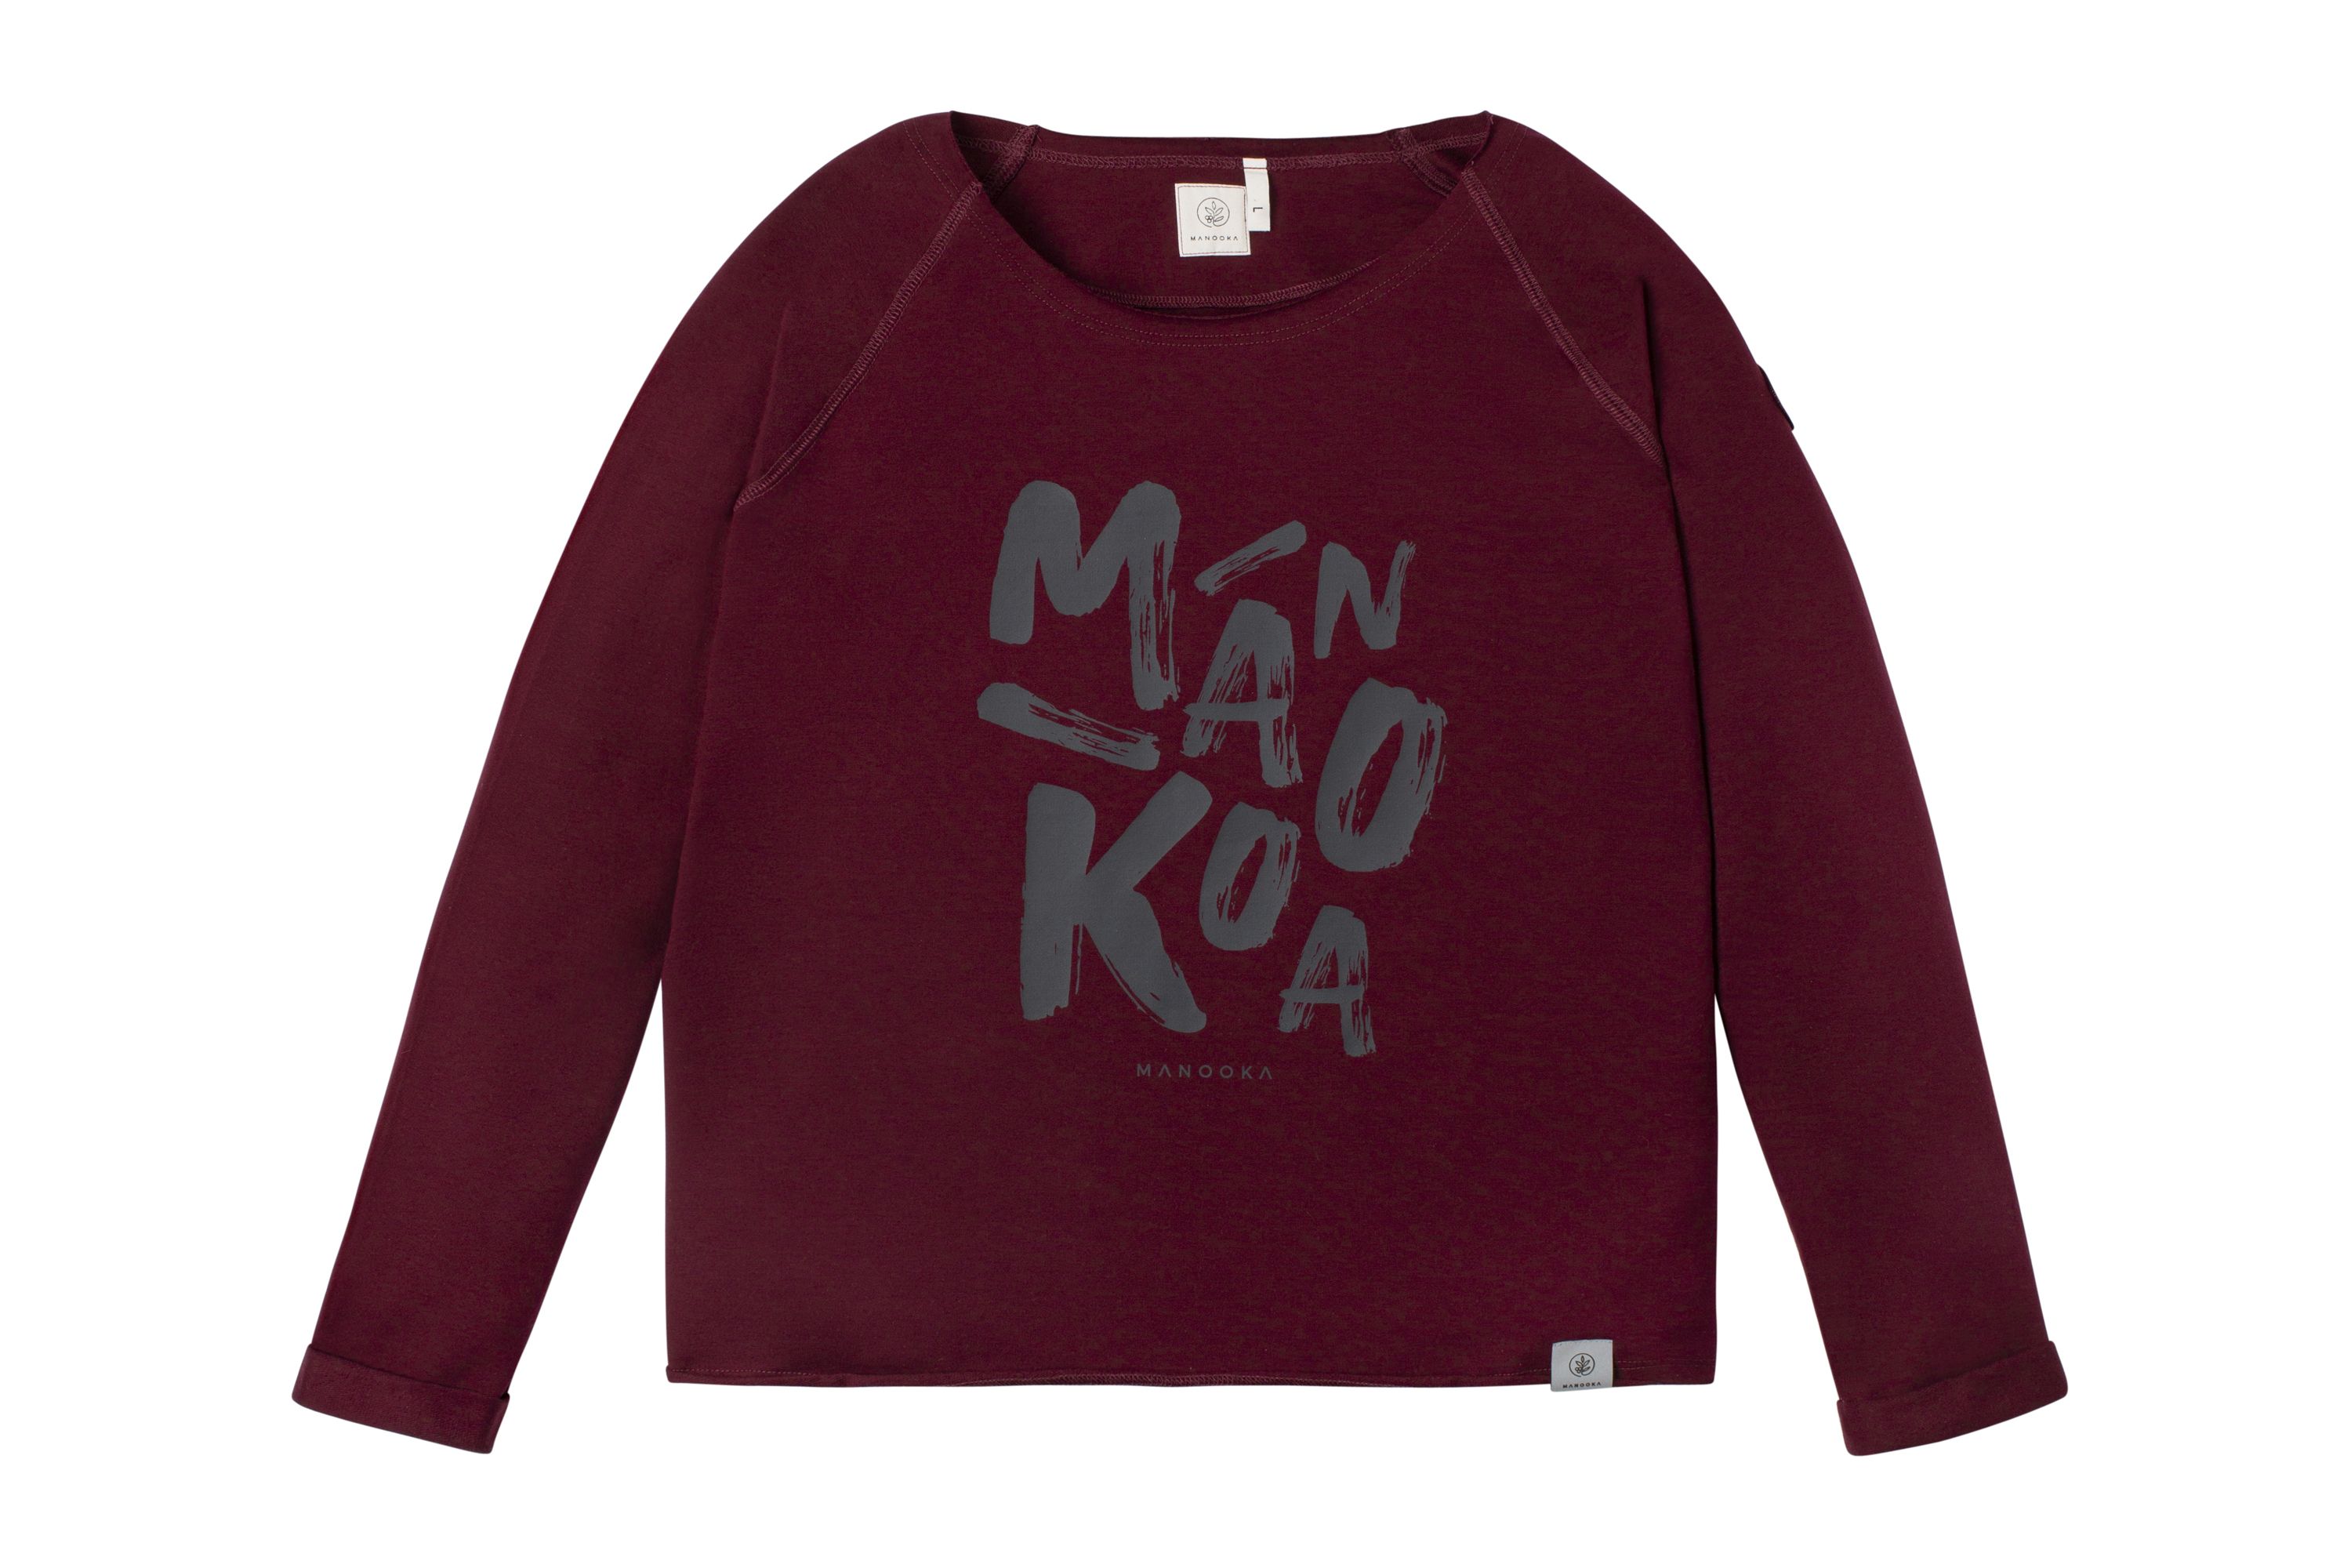 Ein bordeauxfarbenes Nadia-Sweatshirt mit Manooka-Schriftzug